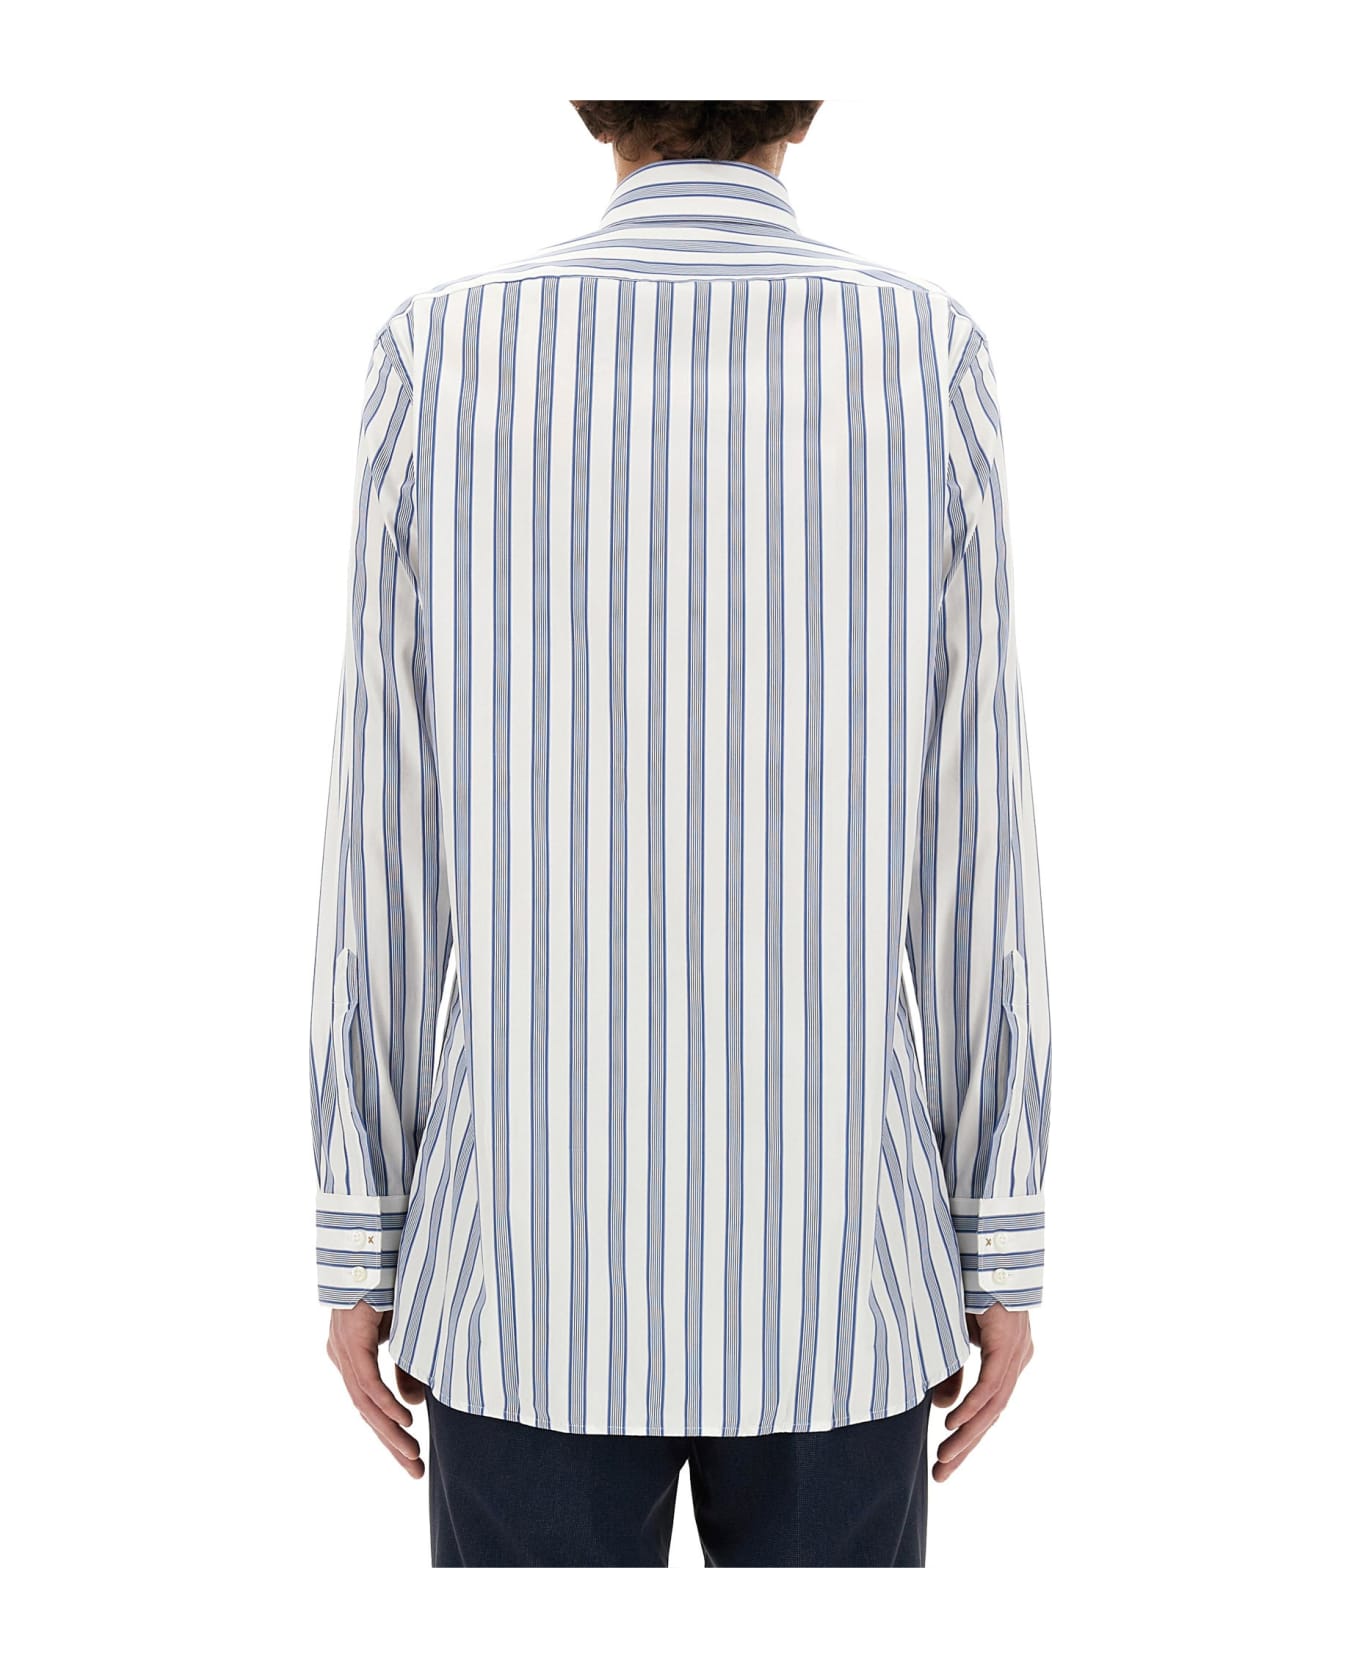 Hugo Boss Shirt With Stripe Pattern - BABY BLUE シャツ